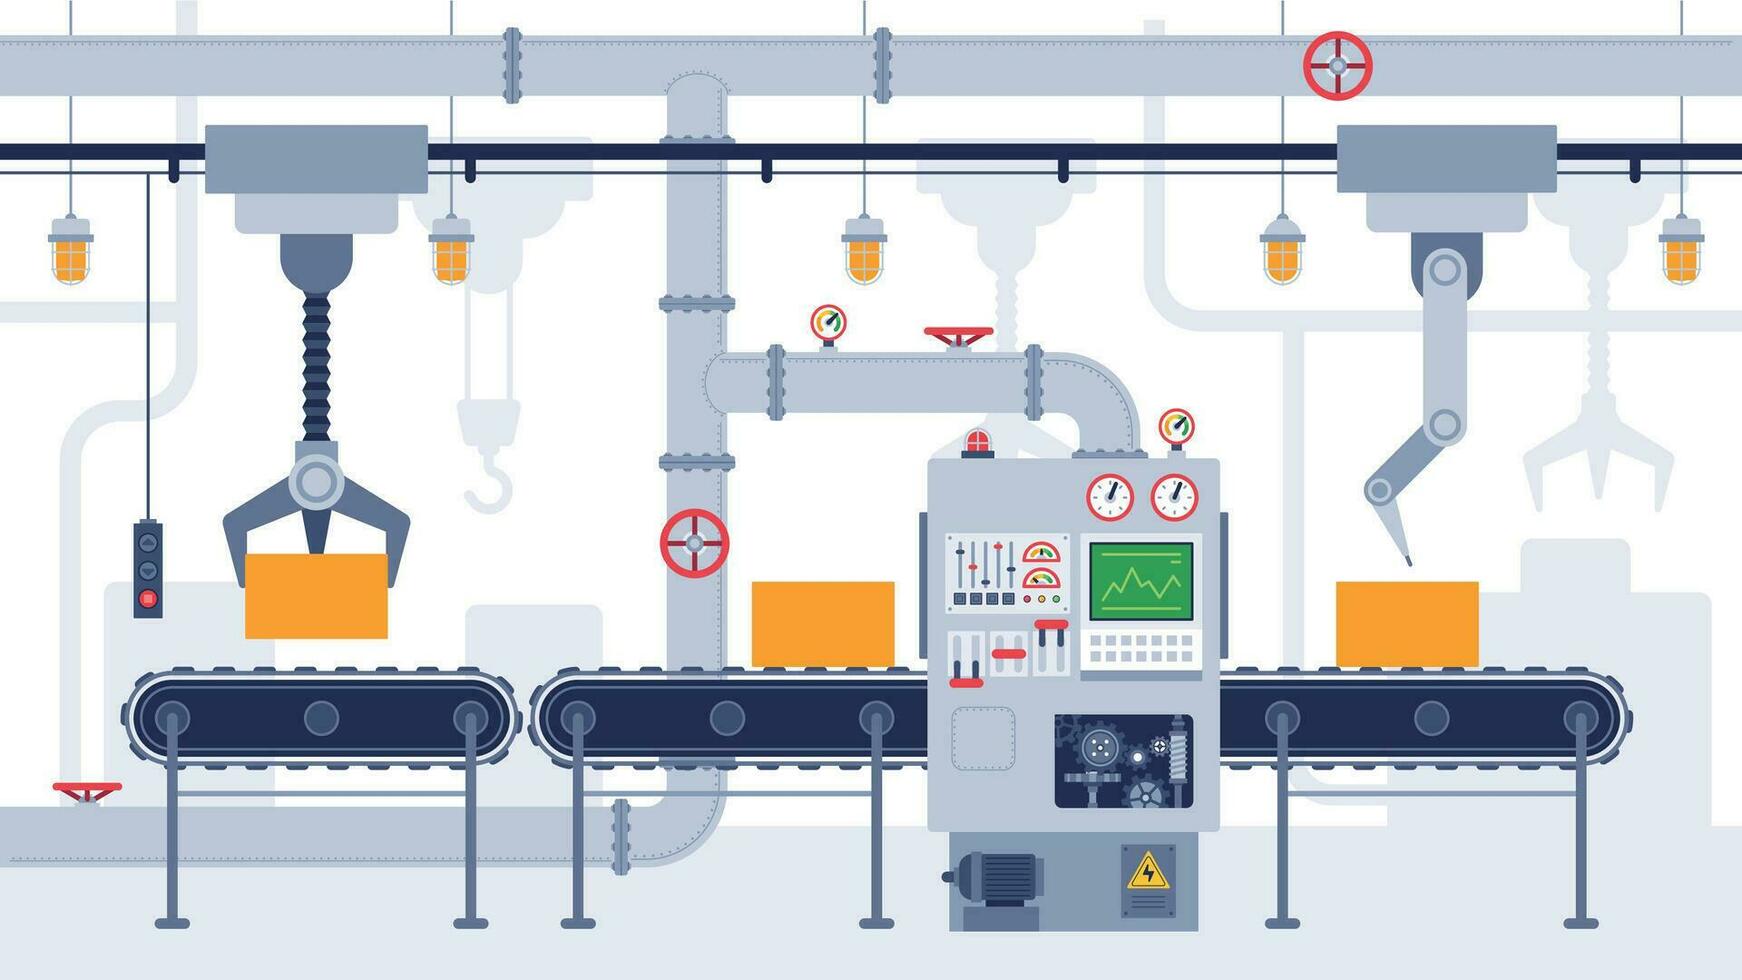 Conveyor. Industrial conveyor belt, manufacturing equipment, product transportation process, efficient automation production vector concept